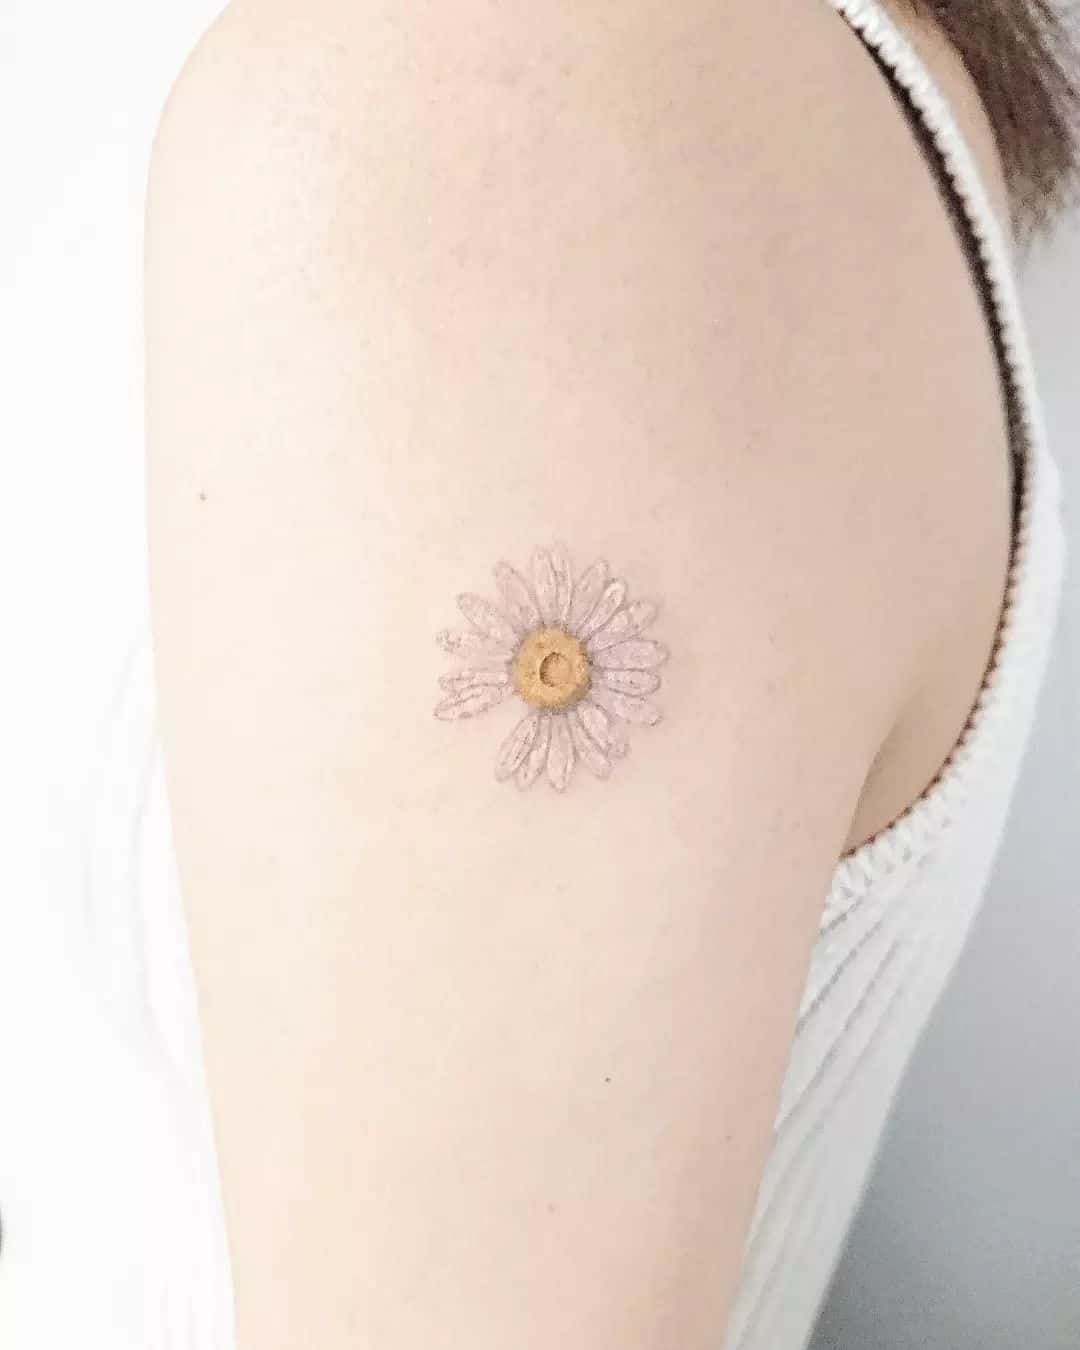 Daisy tattoo by horirei tattoo s